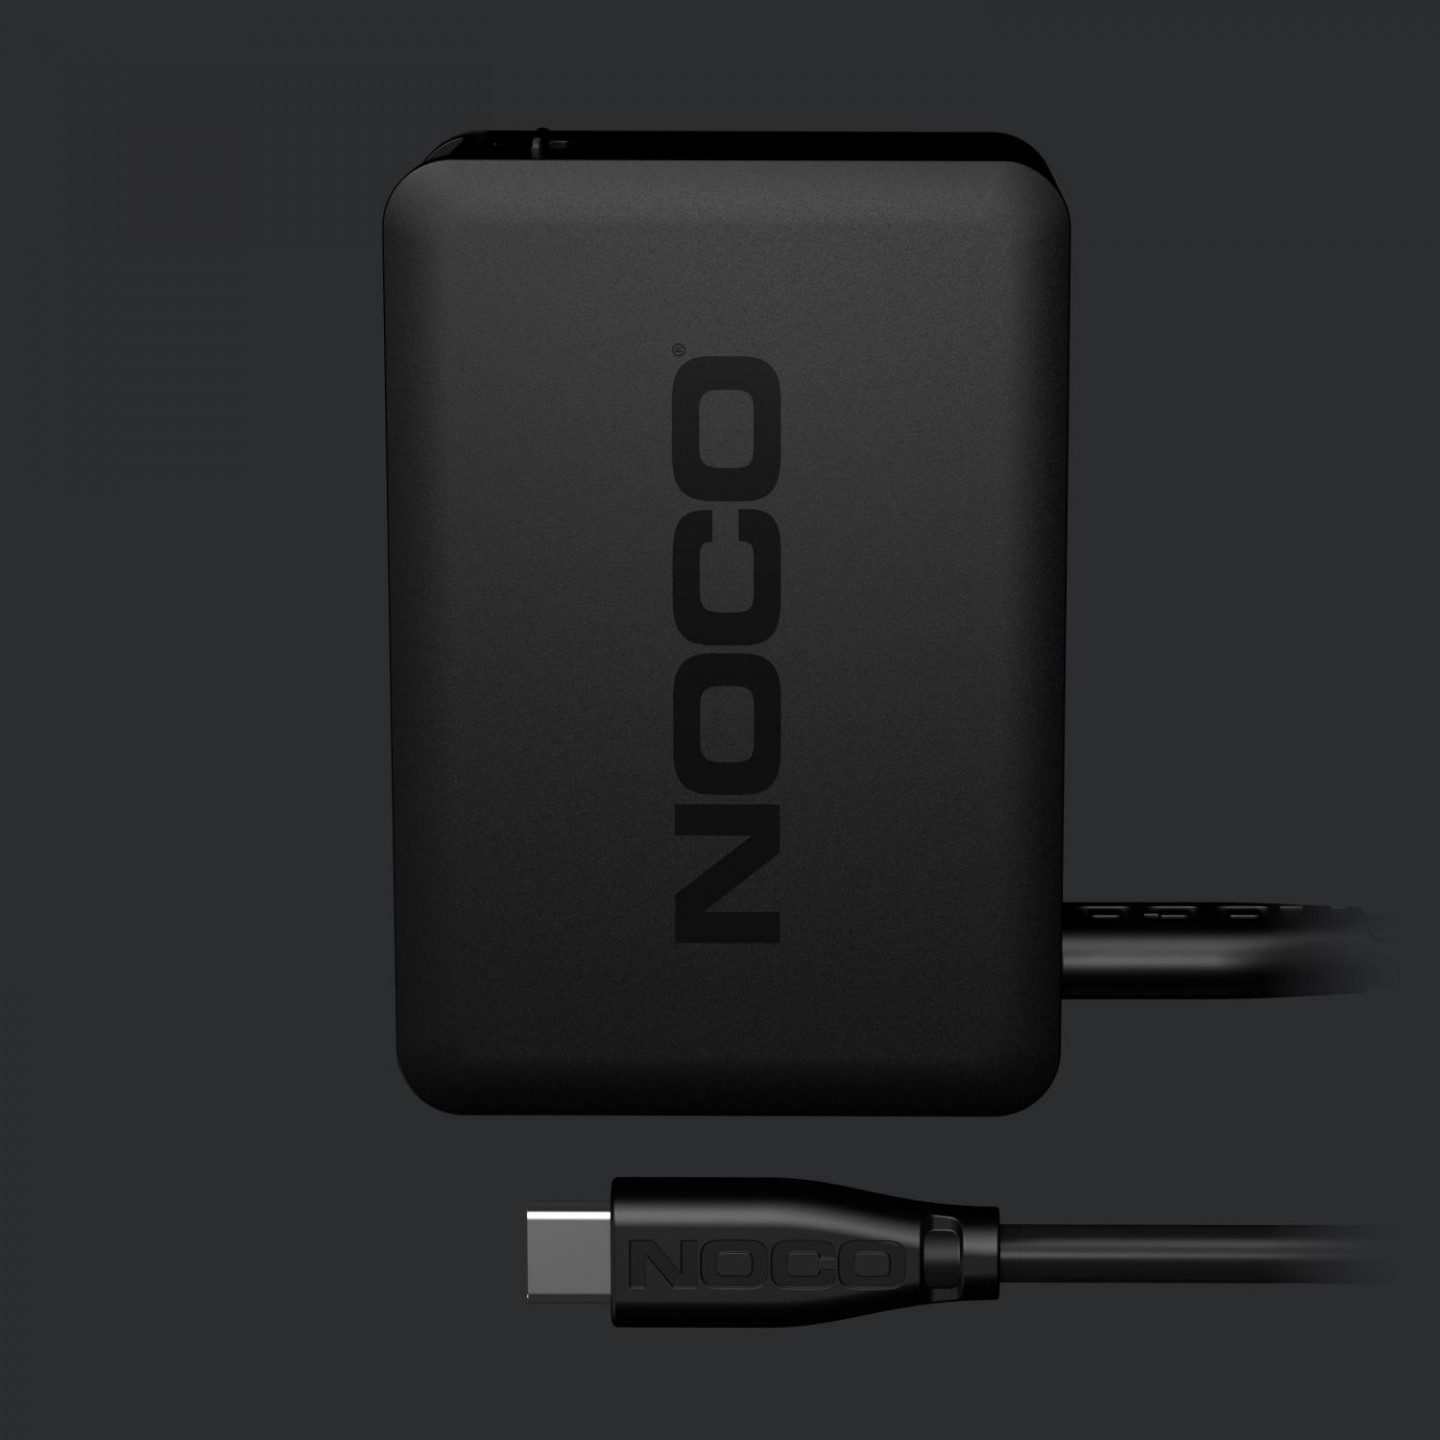 NOCO Boost X GBX155 4250A 12V UltraSafe Portable Australia